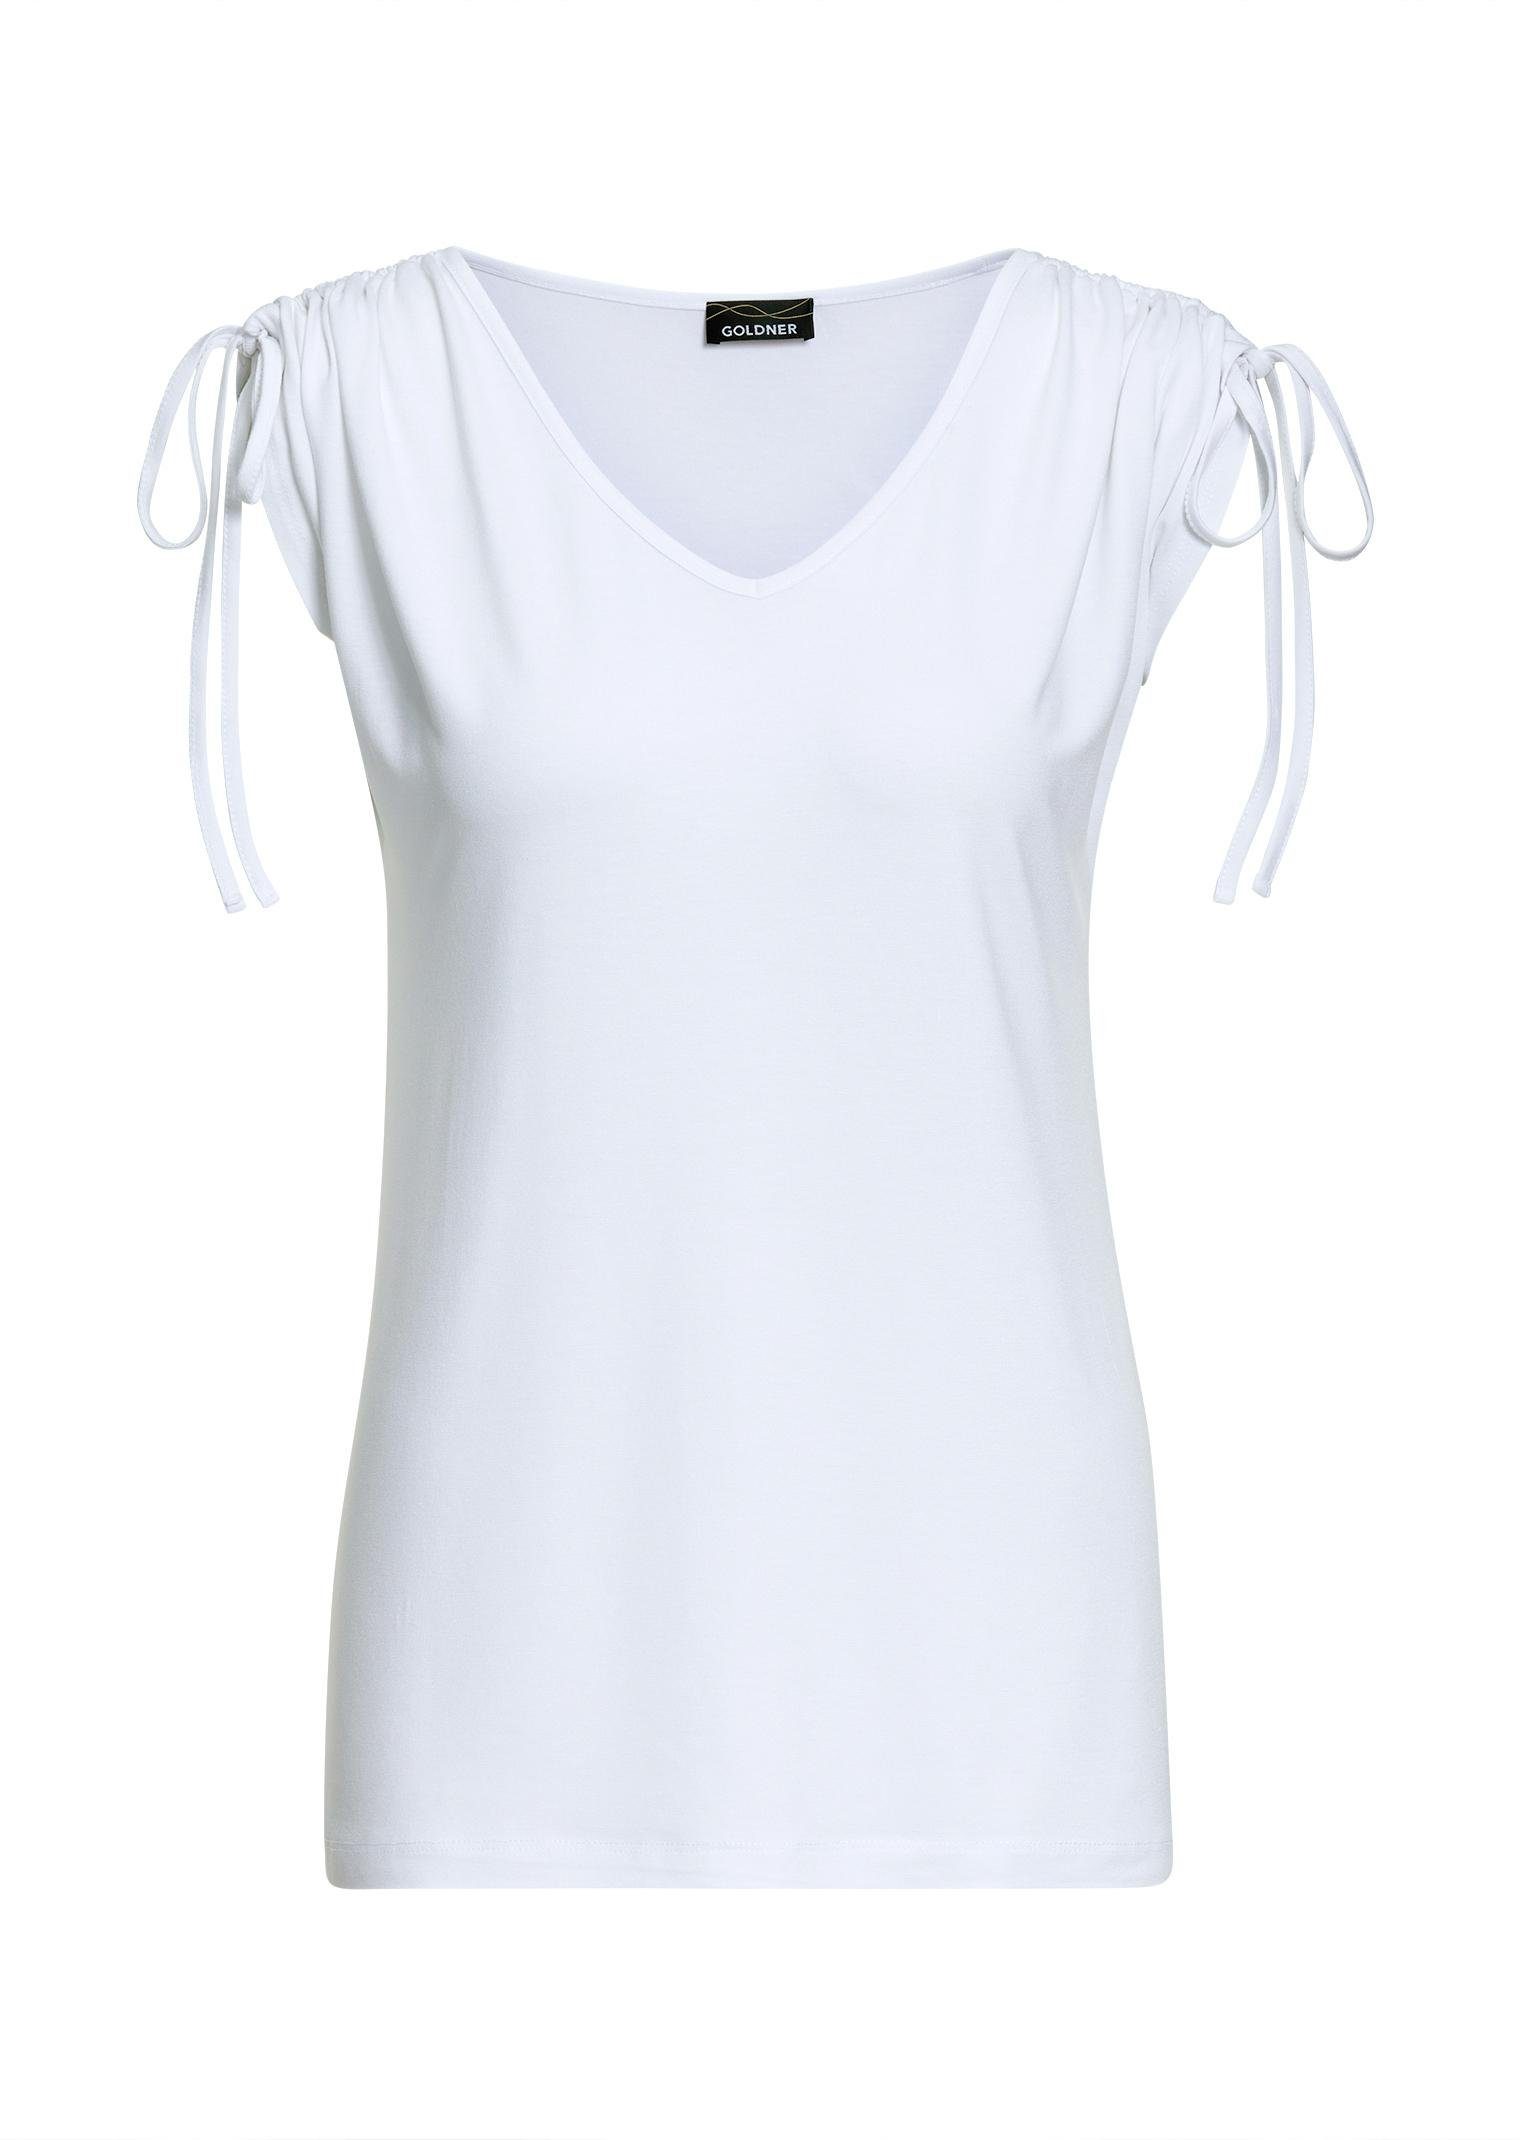 Kurzgröße: Print-Shirt Elegantes weiß Jersey-Shirt GOLDNER